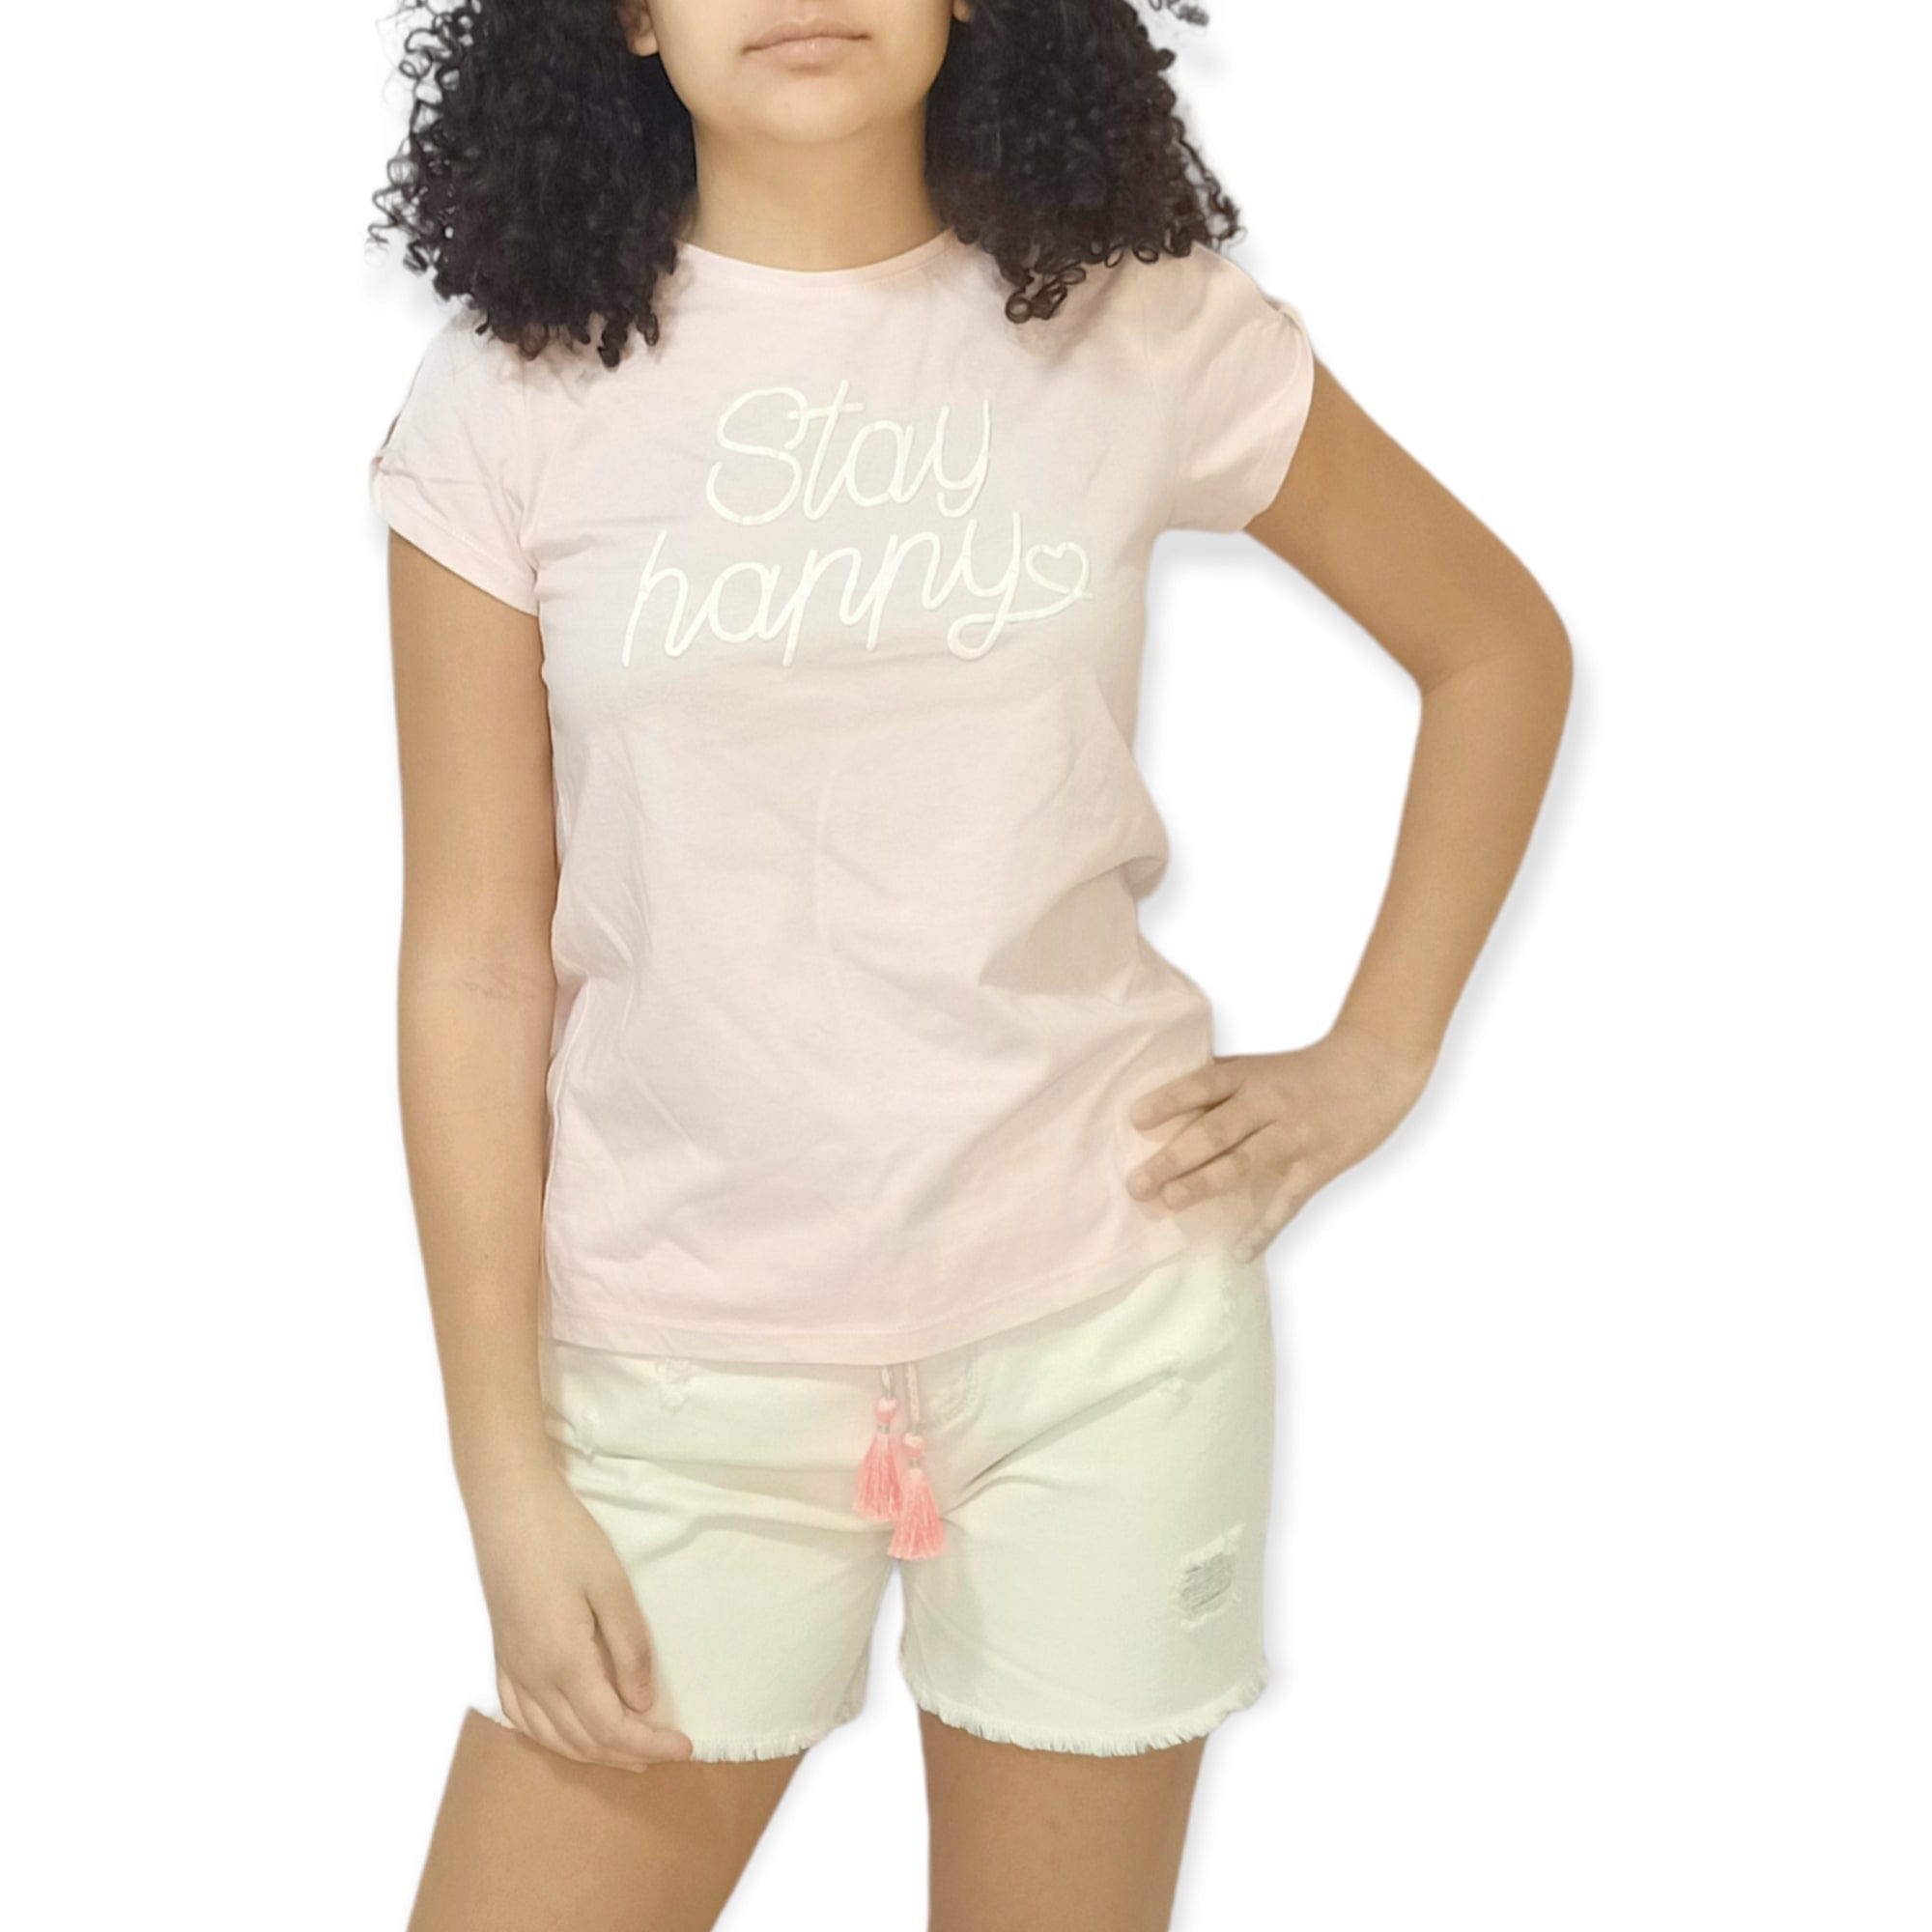 ElOutlet-Sumer Kids Kids Tshirt size 13-14 Girls Tshirt - Pink - Stay Happy